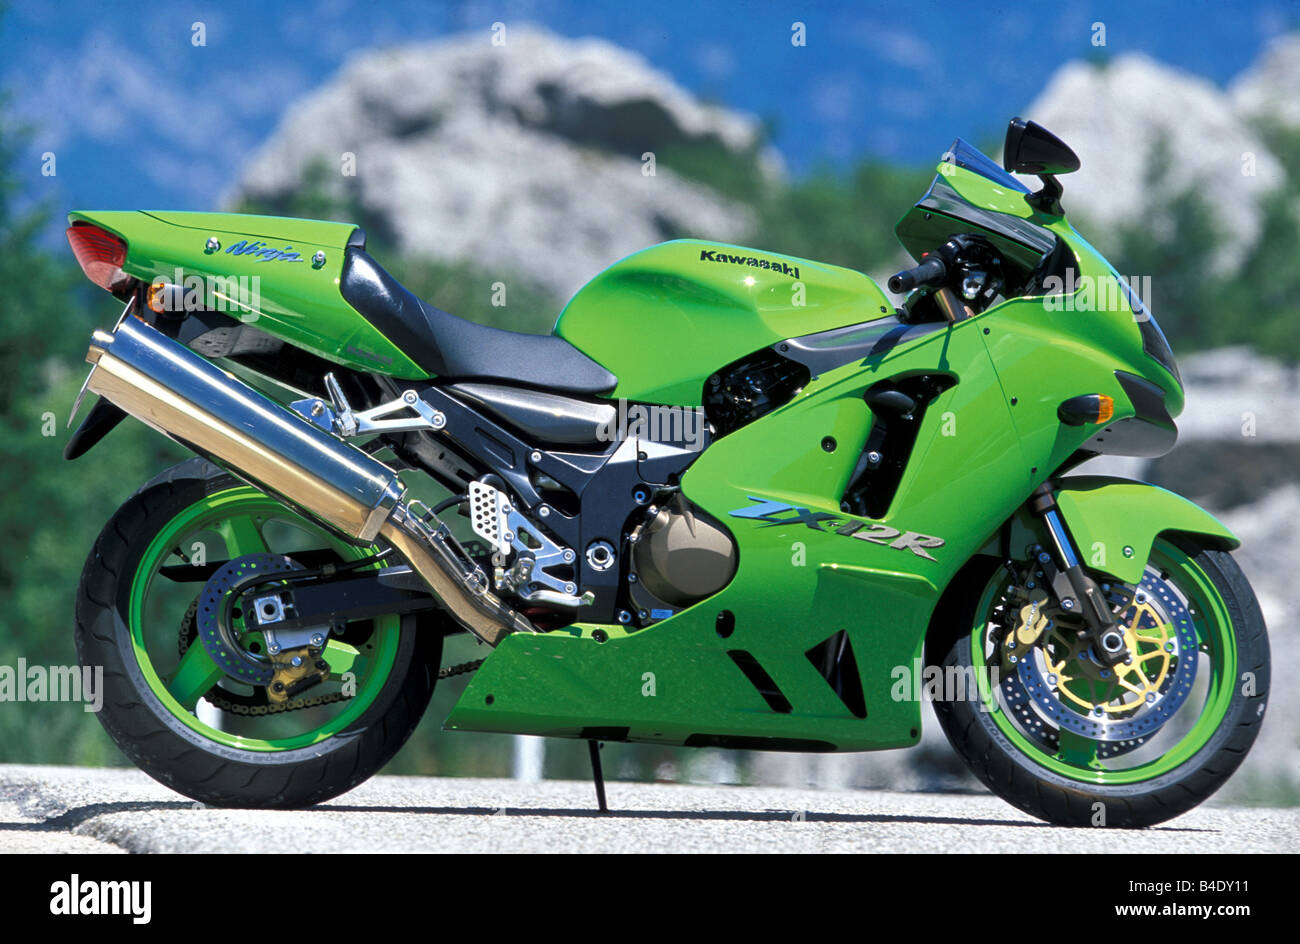 Motor Cycle, Sport Motorrad, Sportler, Kawasaki Ninja ZX-12R, grün, Baujahr  2003, stehend, Wahrung, Side View, Phot Stockfotografie - Alamy